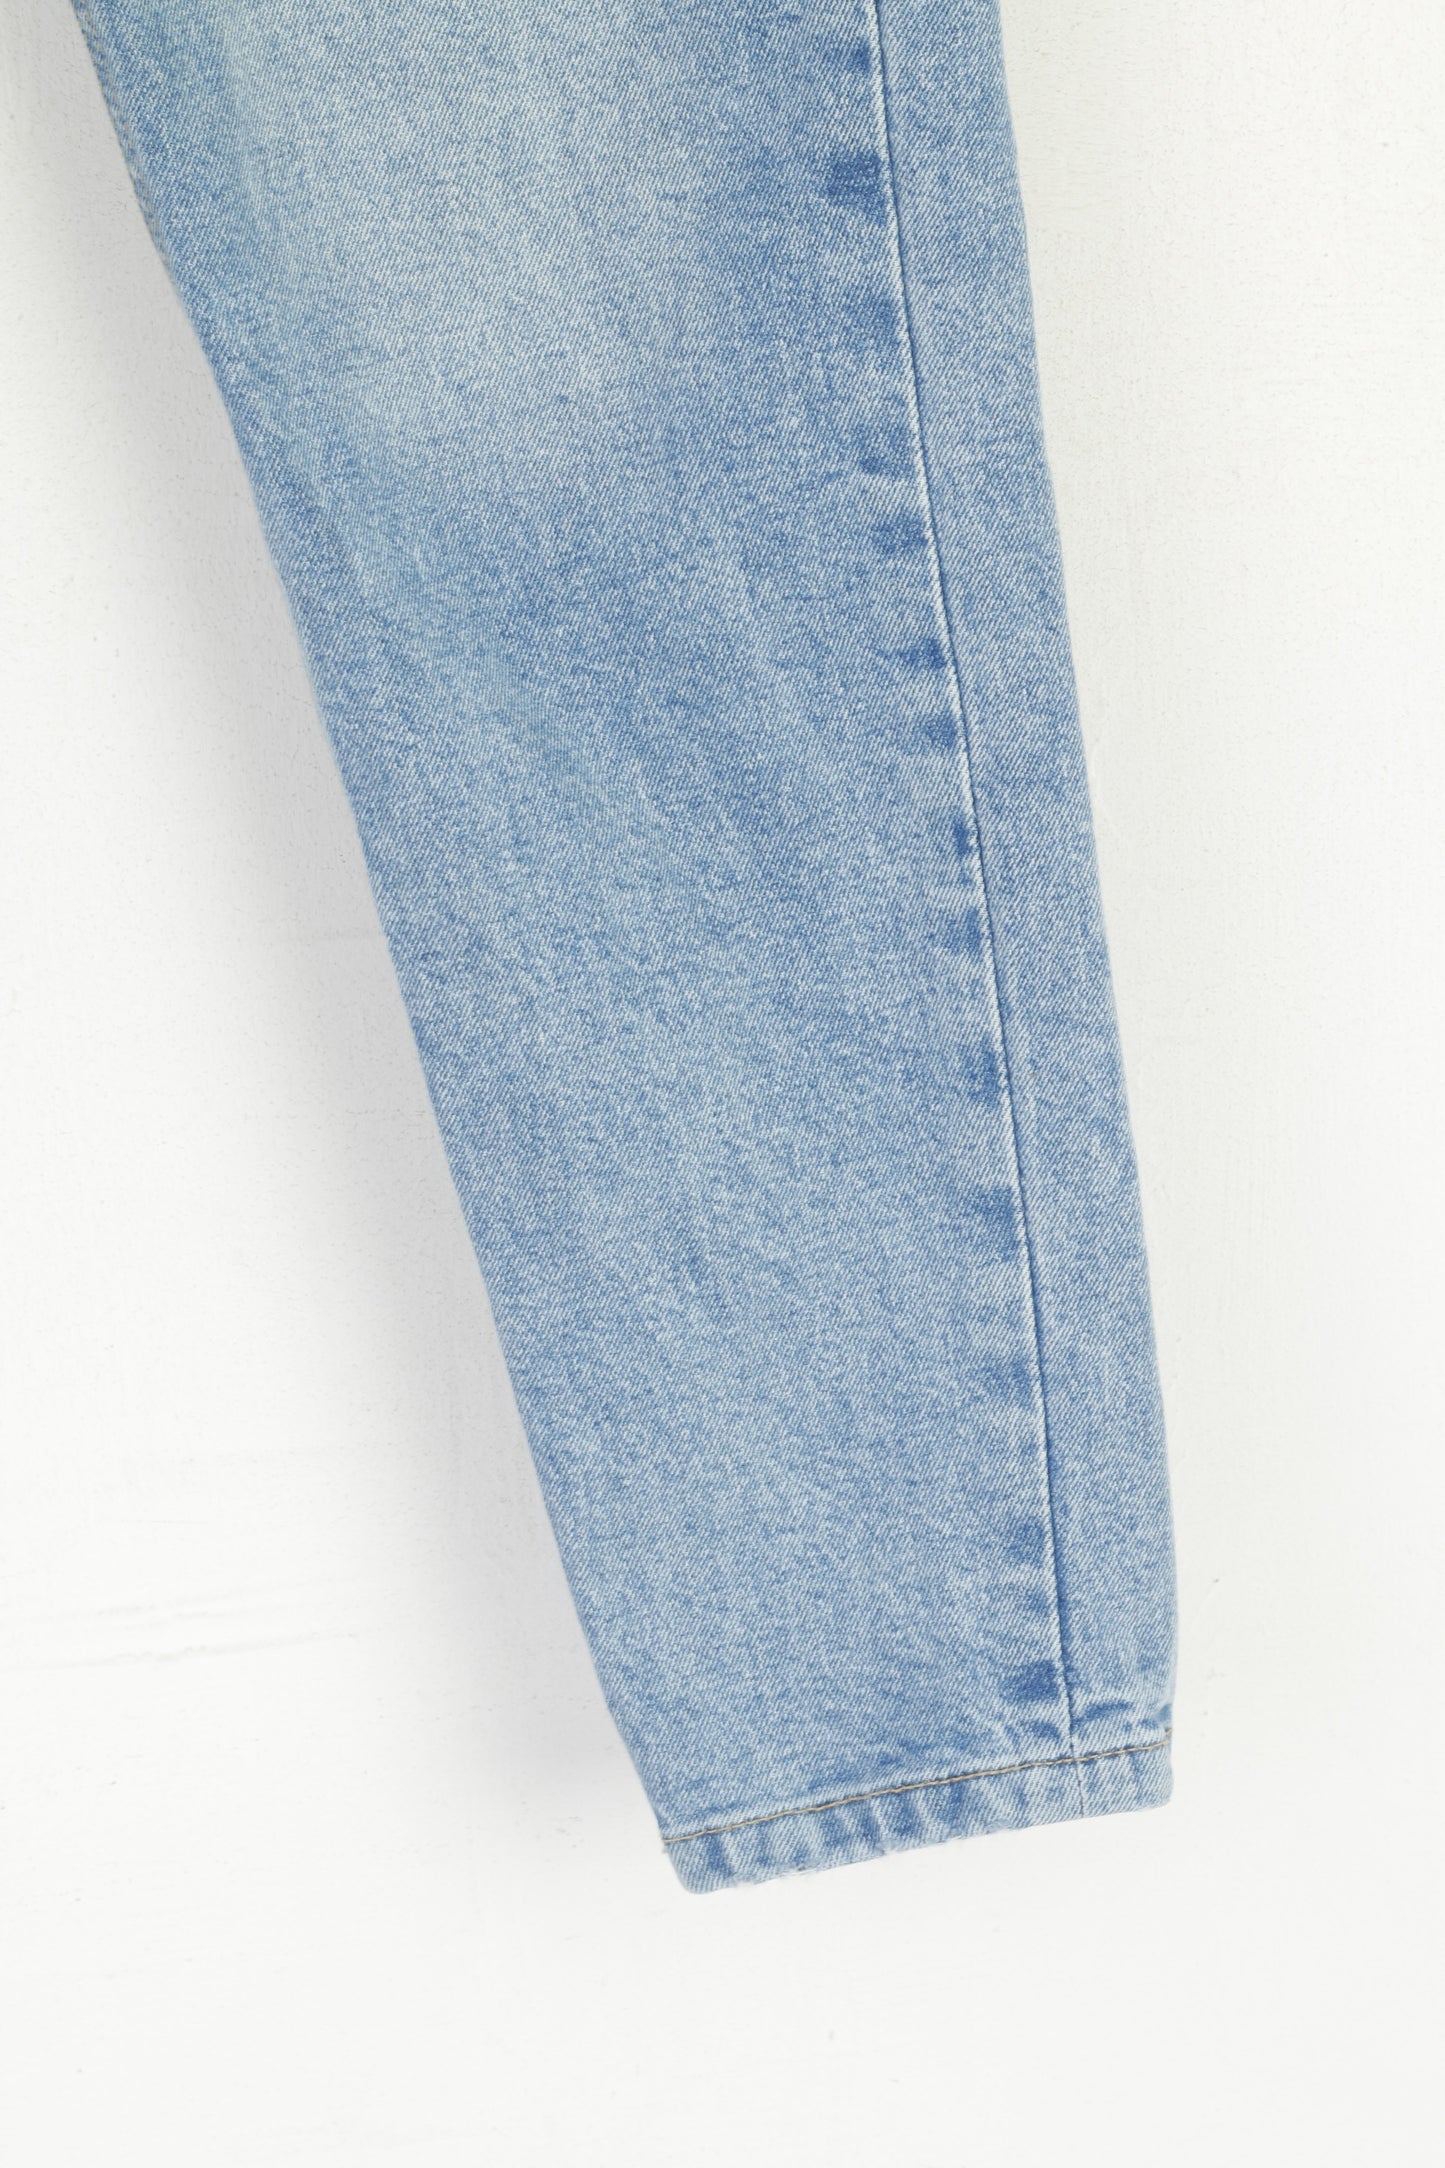 Zara Women 31 40 Jeans Trousers Blue Wash Cotton Denim Mom Fit Pants